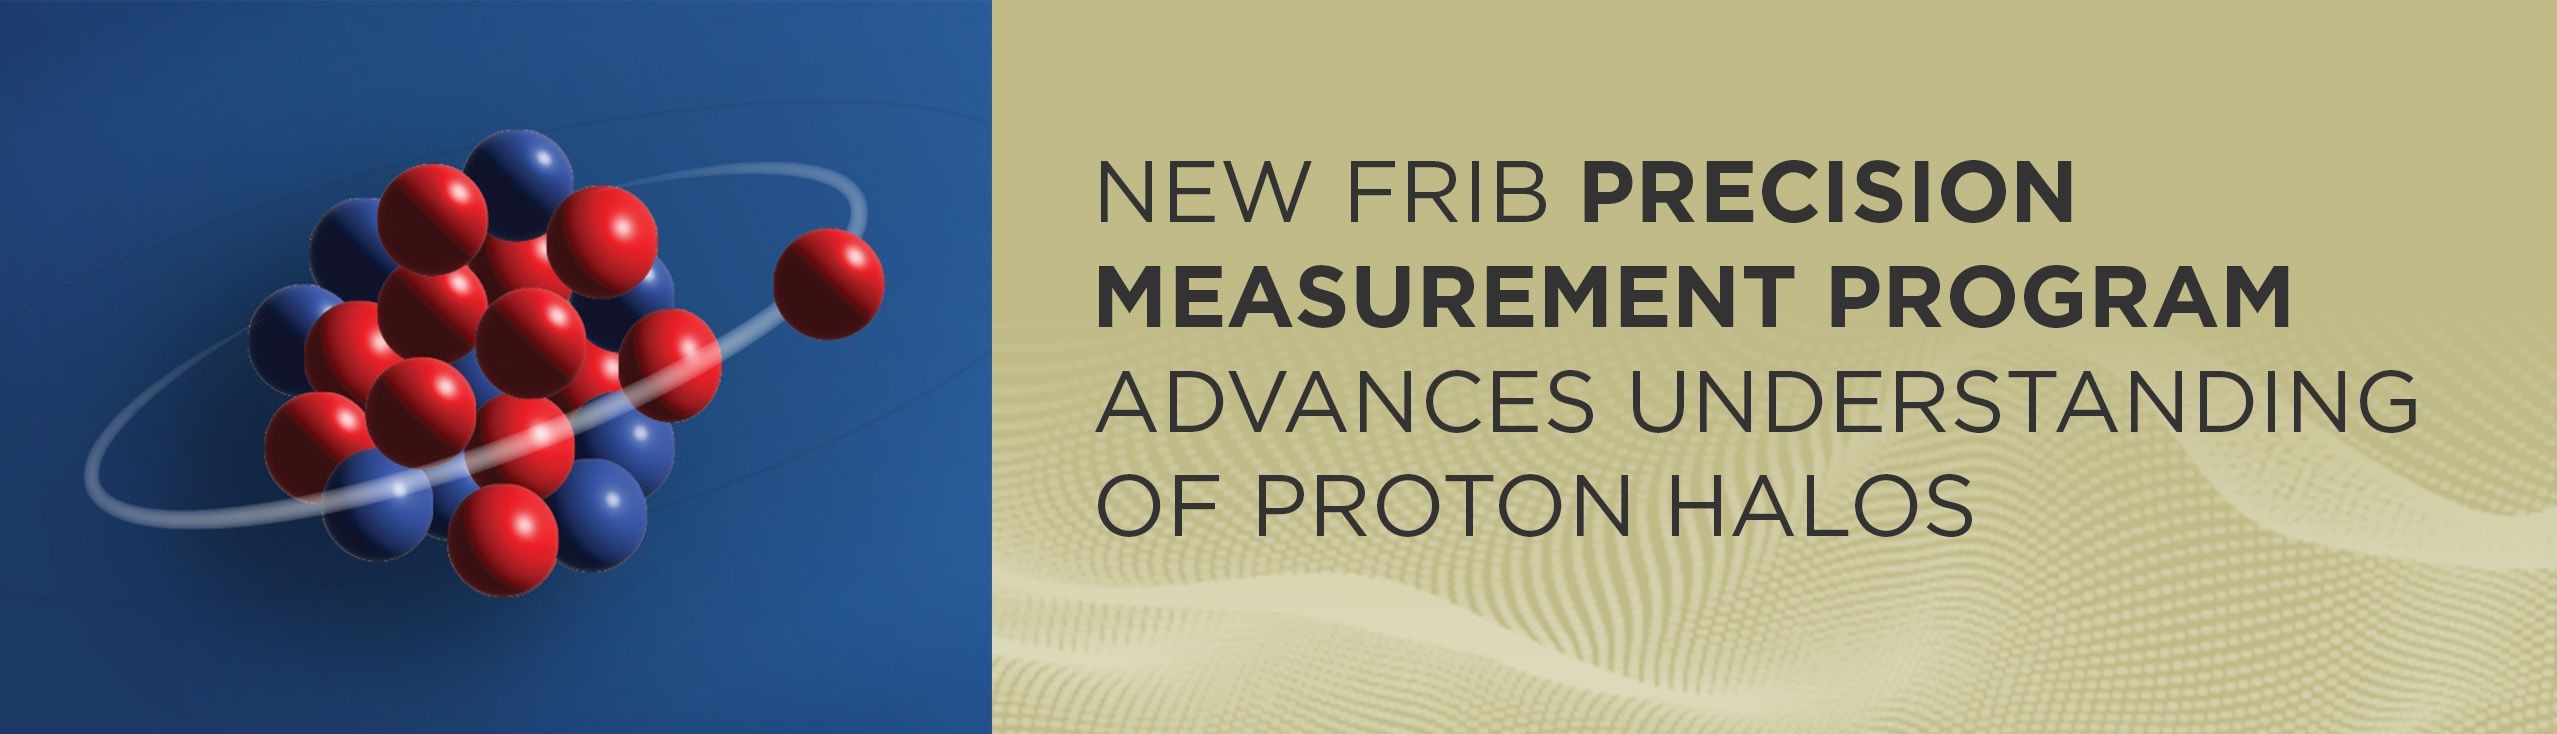 Graphic of a proton halo, with text "New FRIB precision measurement program advances understanding of proton halos"